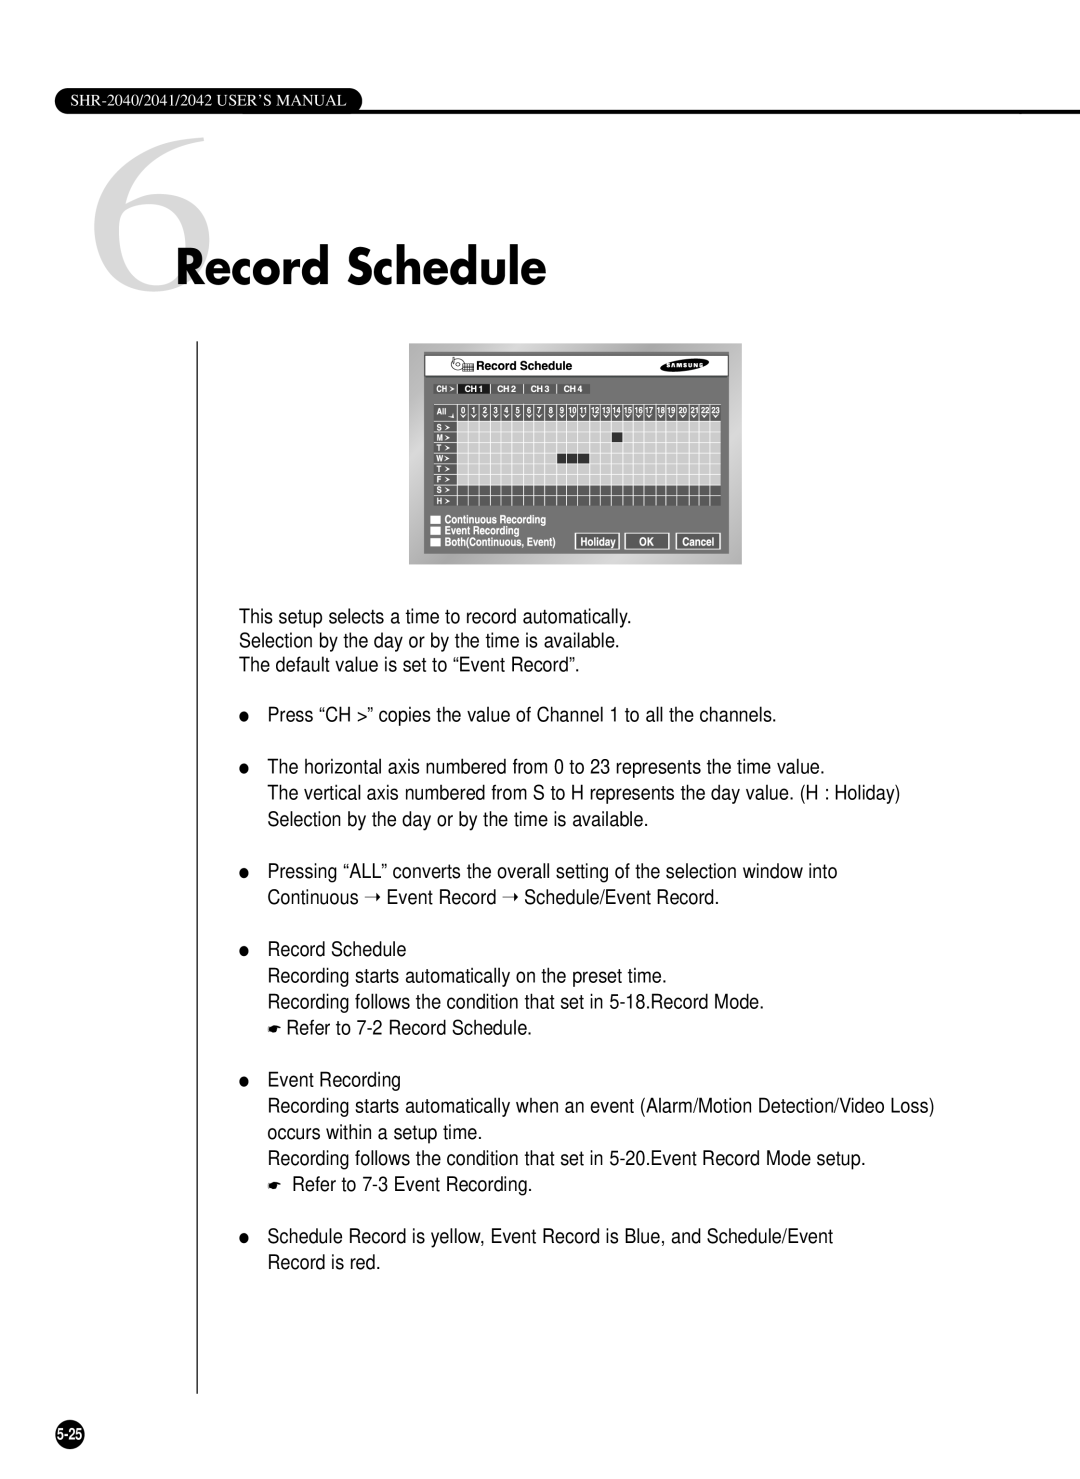 Samsung SHR-2042P, SHR-2040P/GAR, SHR-2040PX, SHR-2040P/XEC manual 6Record Schedule 